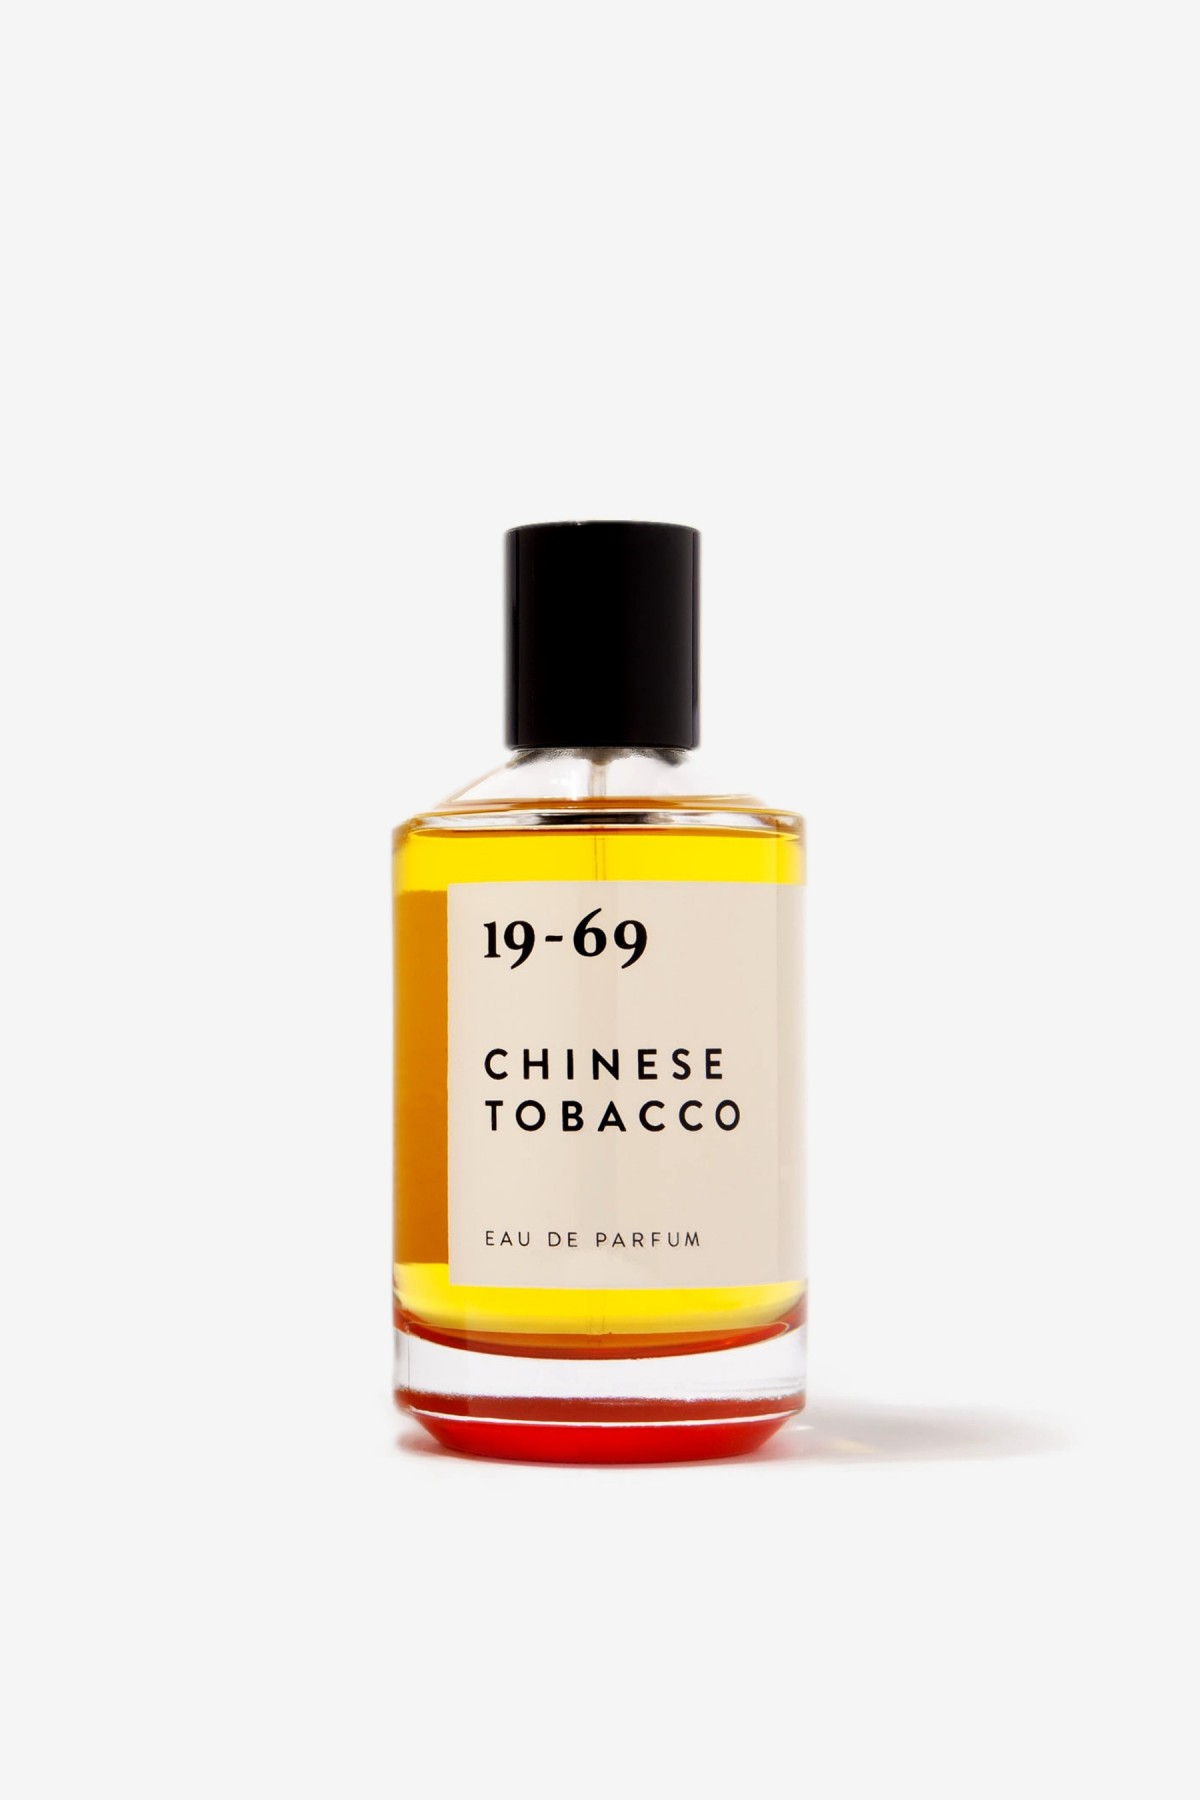 19-69 Chinese Tobacco Eau de Parfum in 100ml